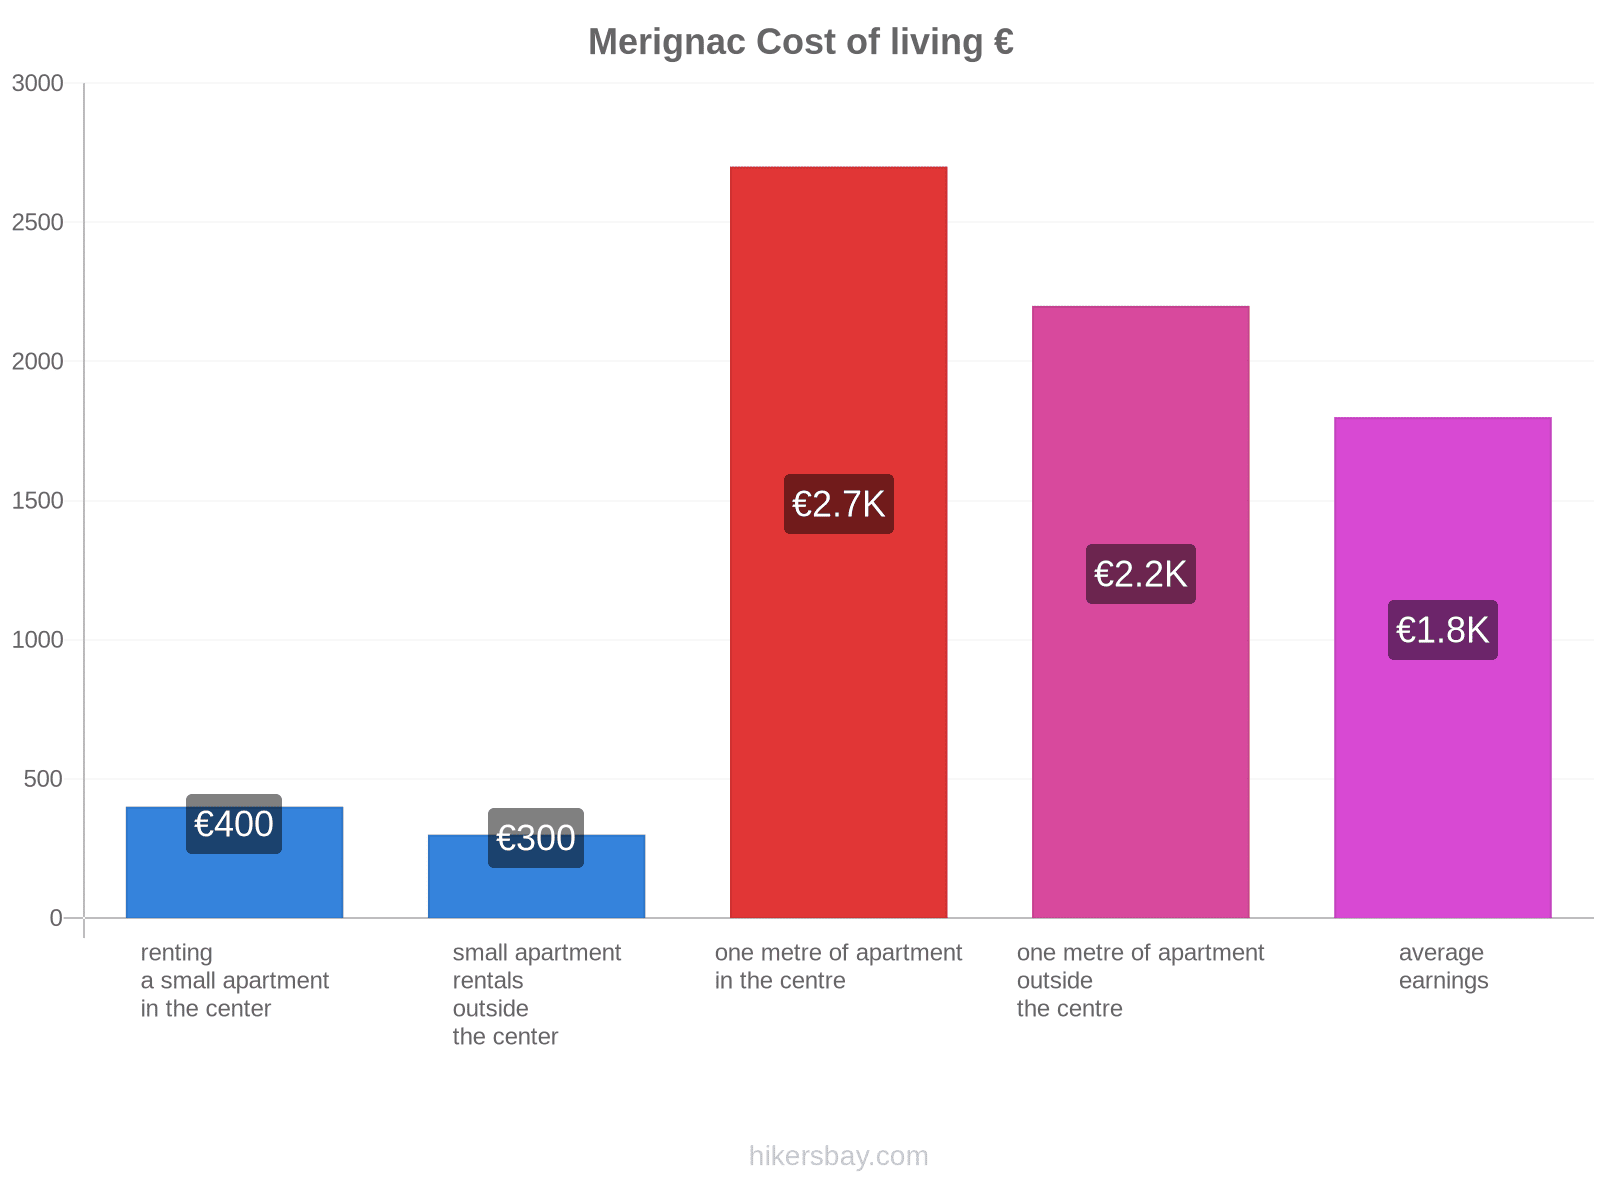 Merignac cost of living hikersbay.com